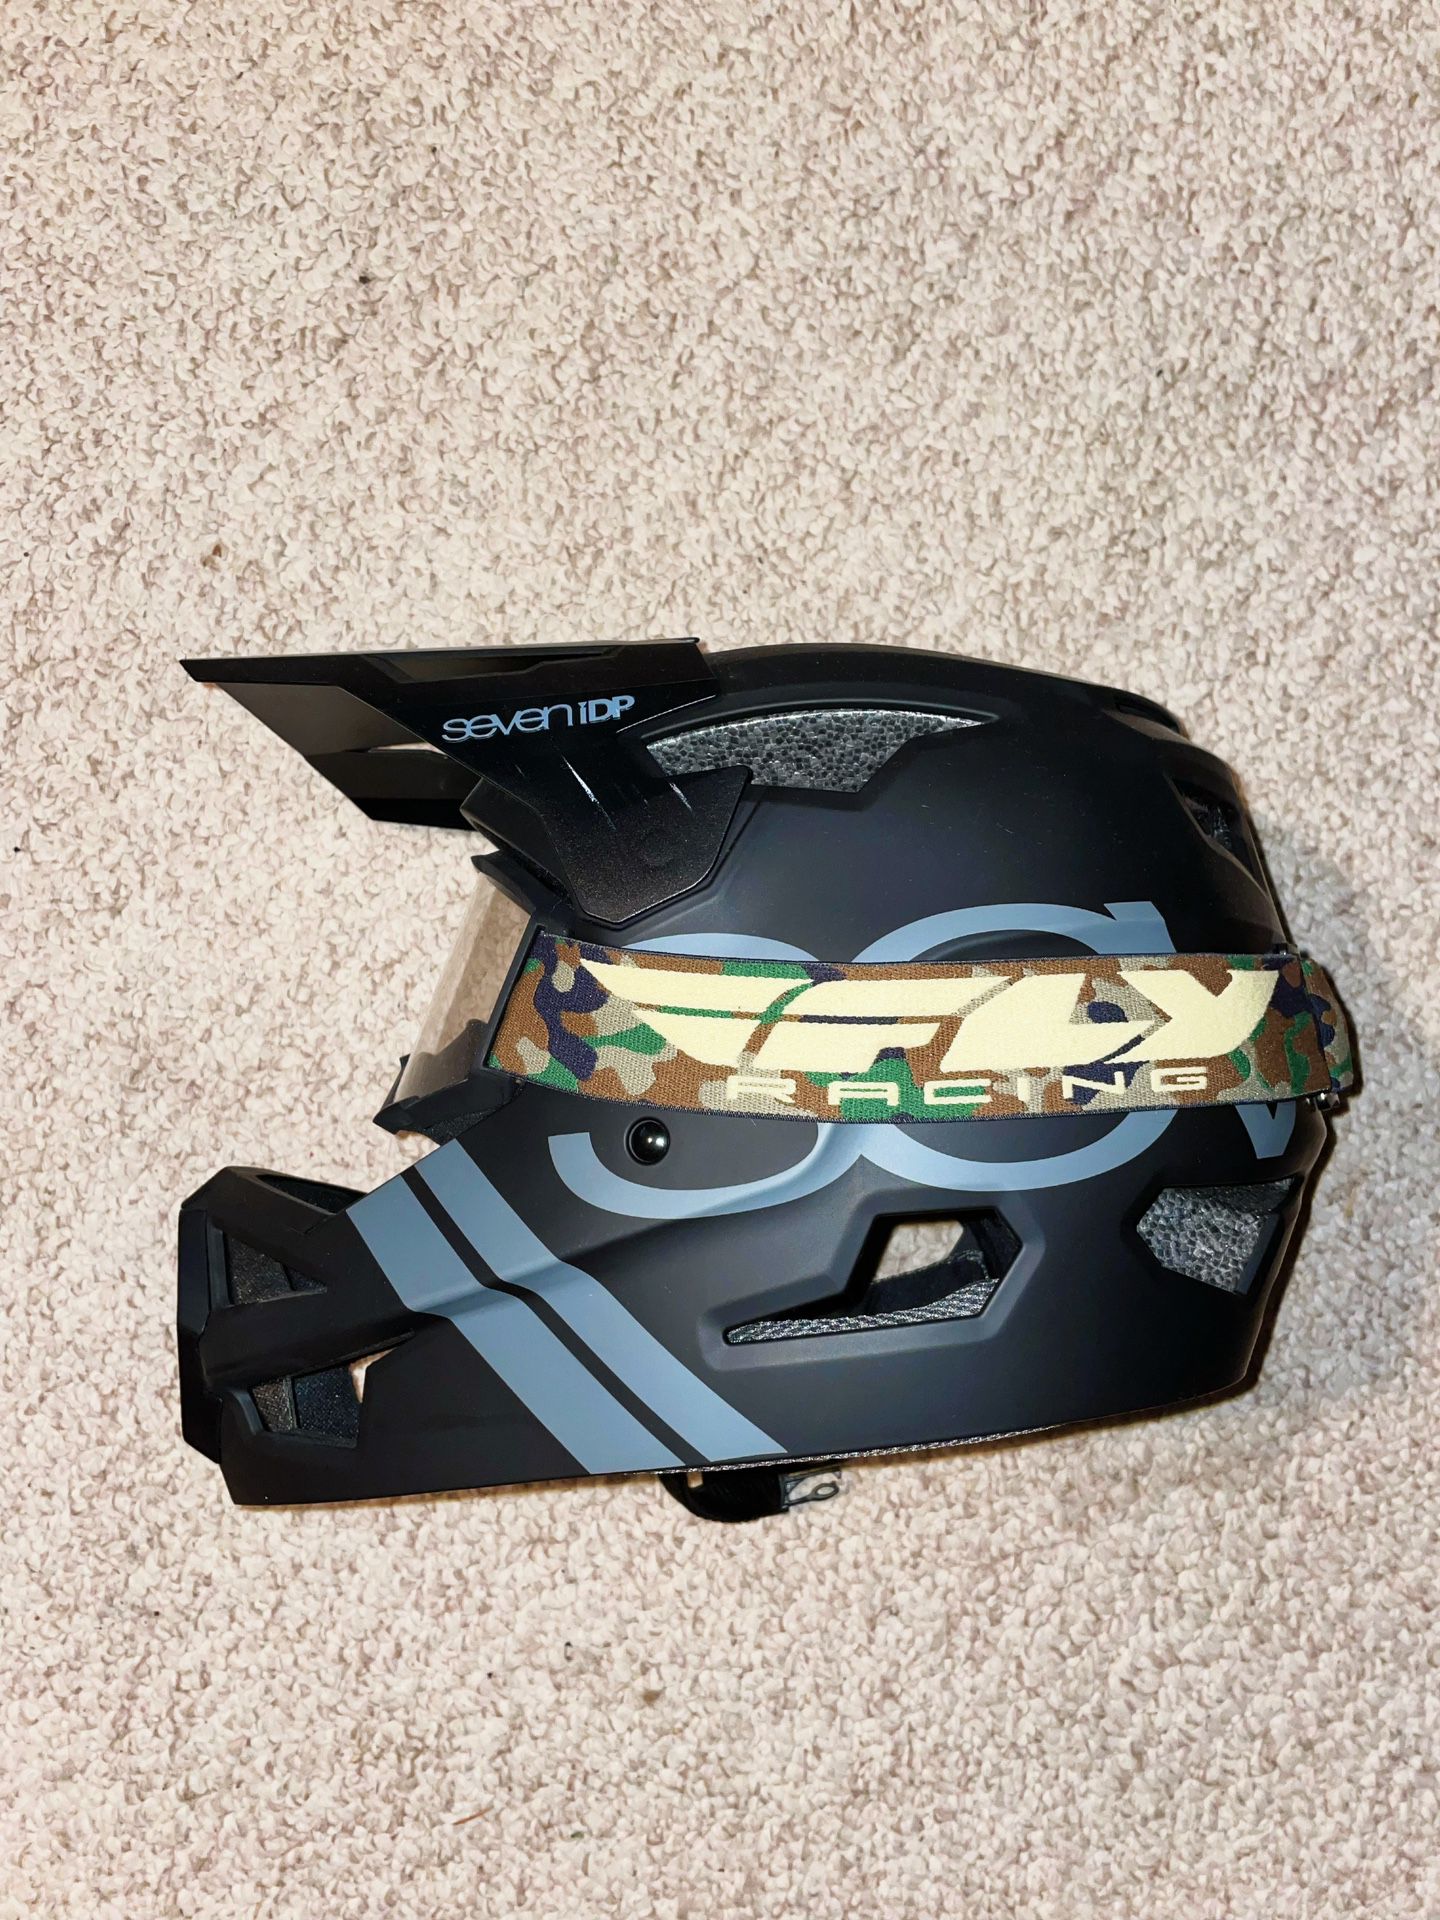 Full Face Mountain Biking Helmet + Fly Racing Goggles Bundle